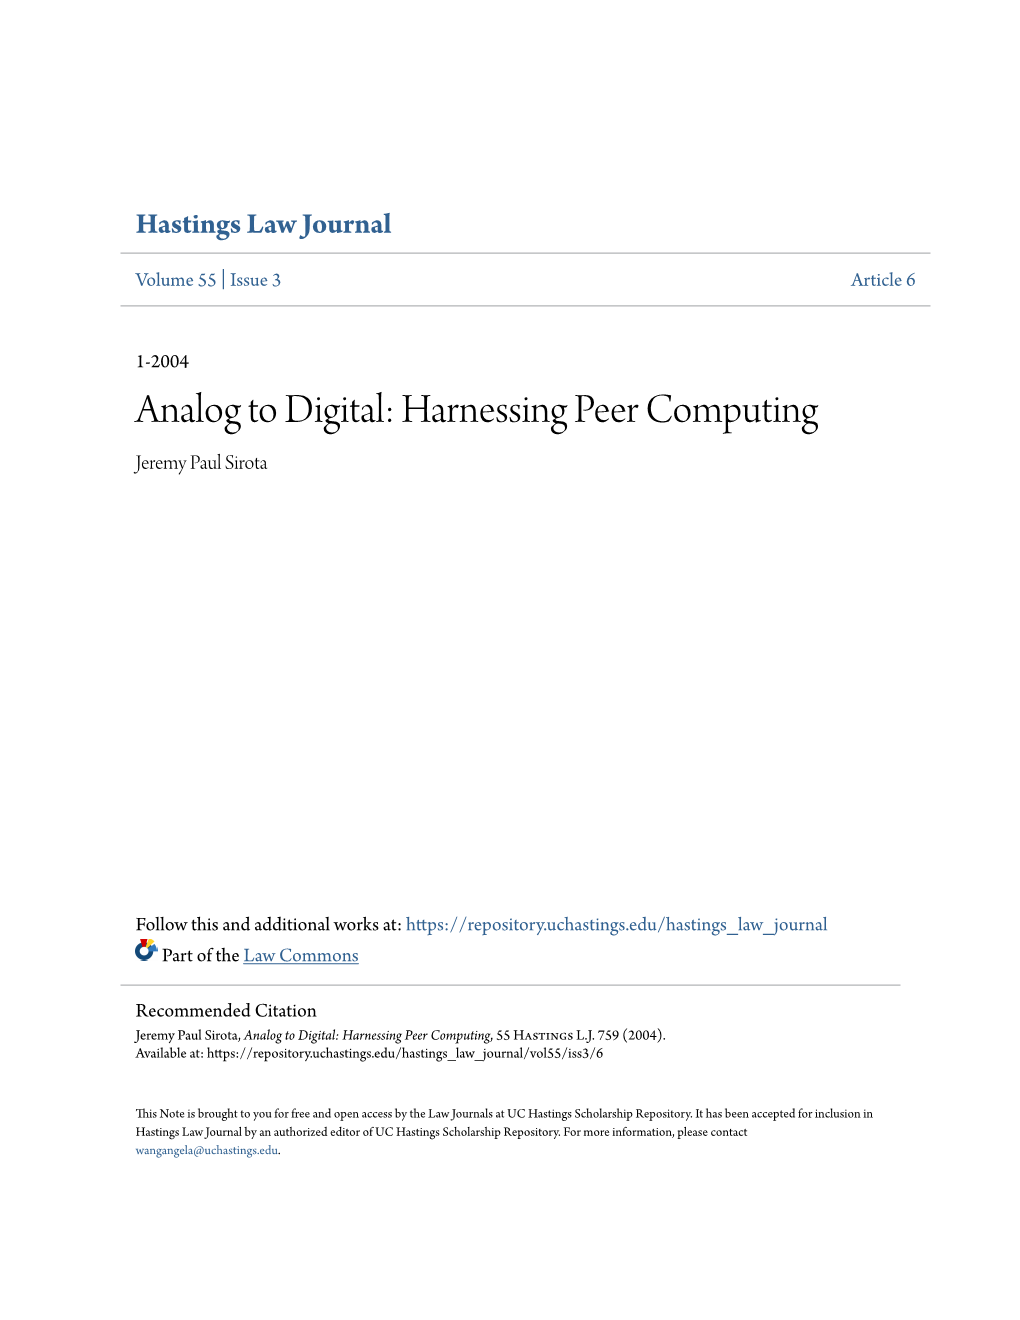 Analog to Digital: Harnessing Peer Computing Jeremy Paul Sirota